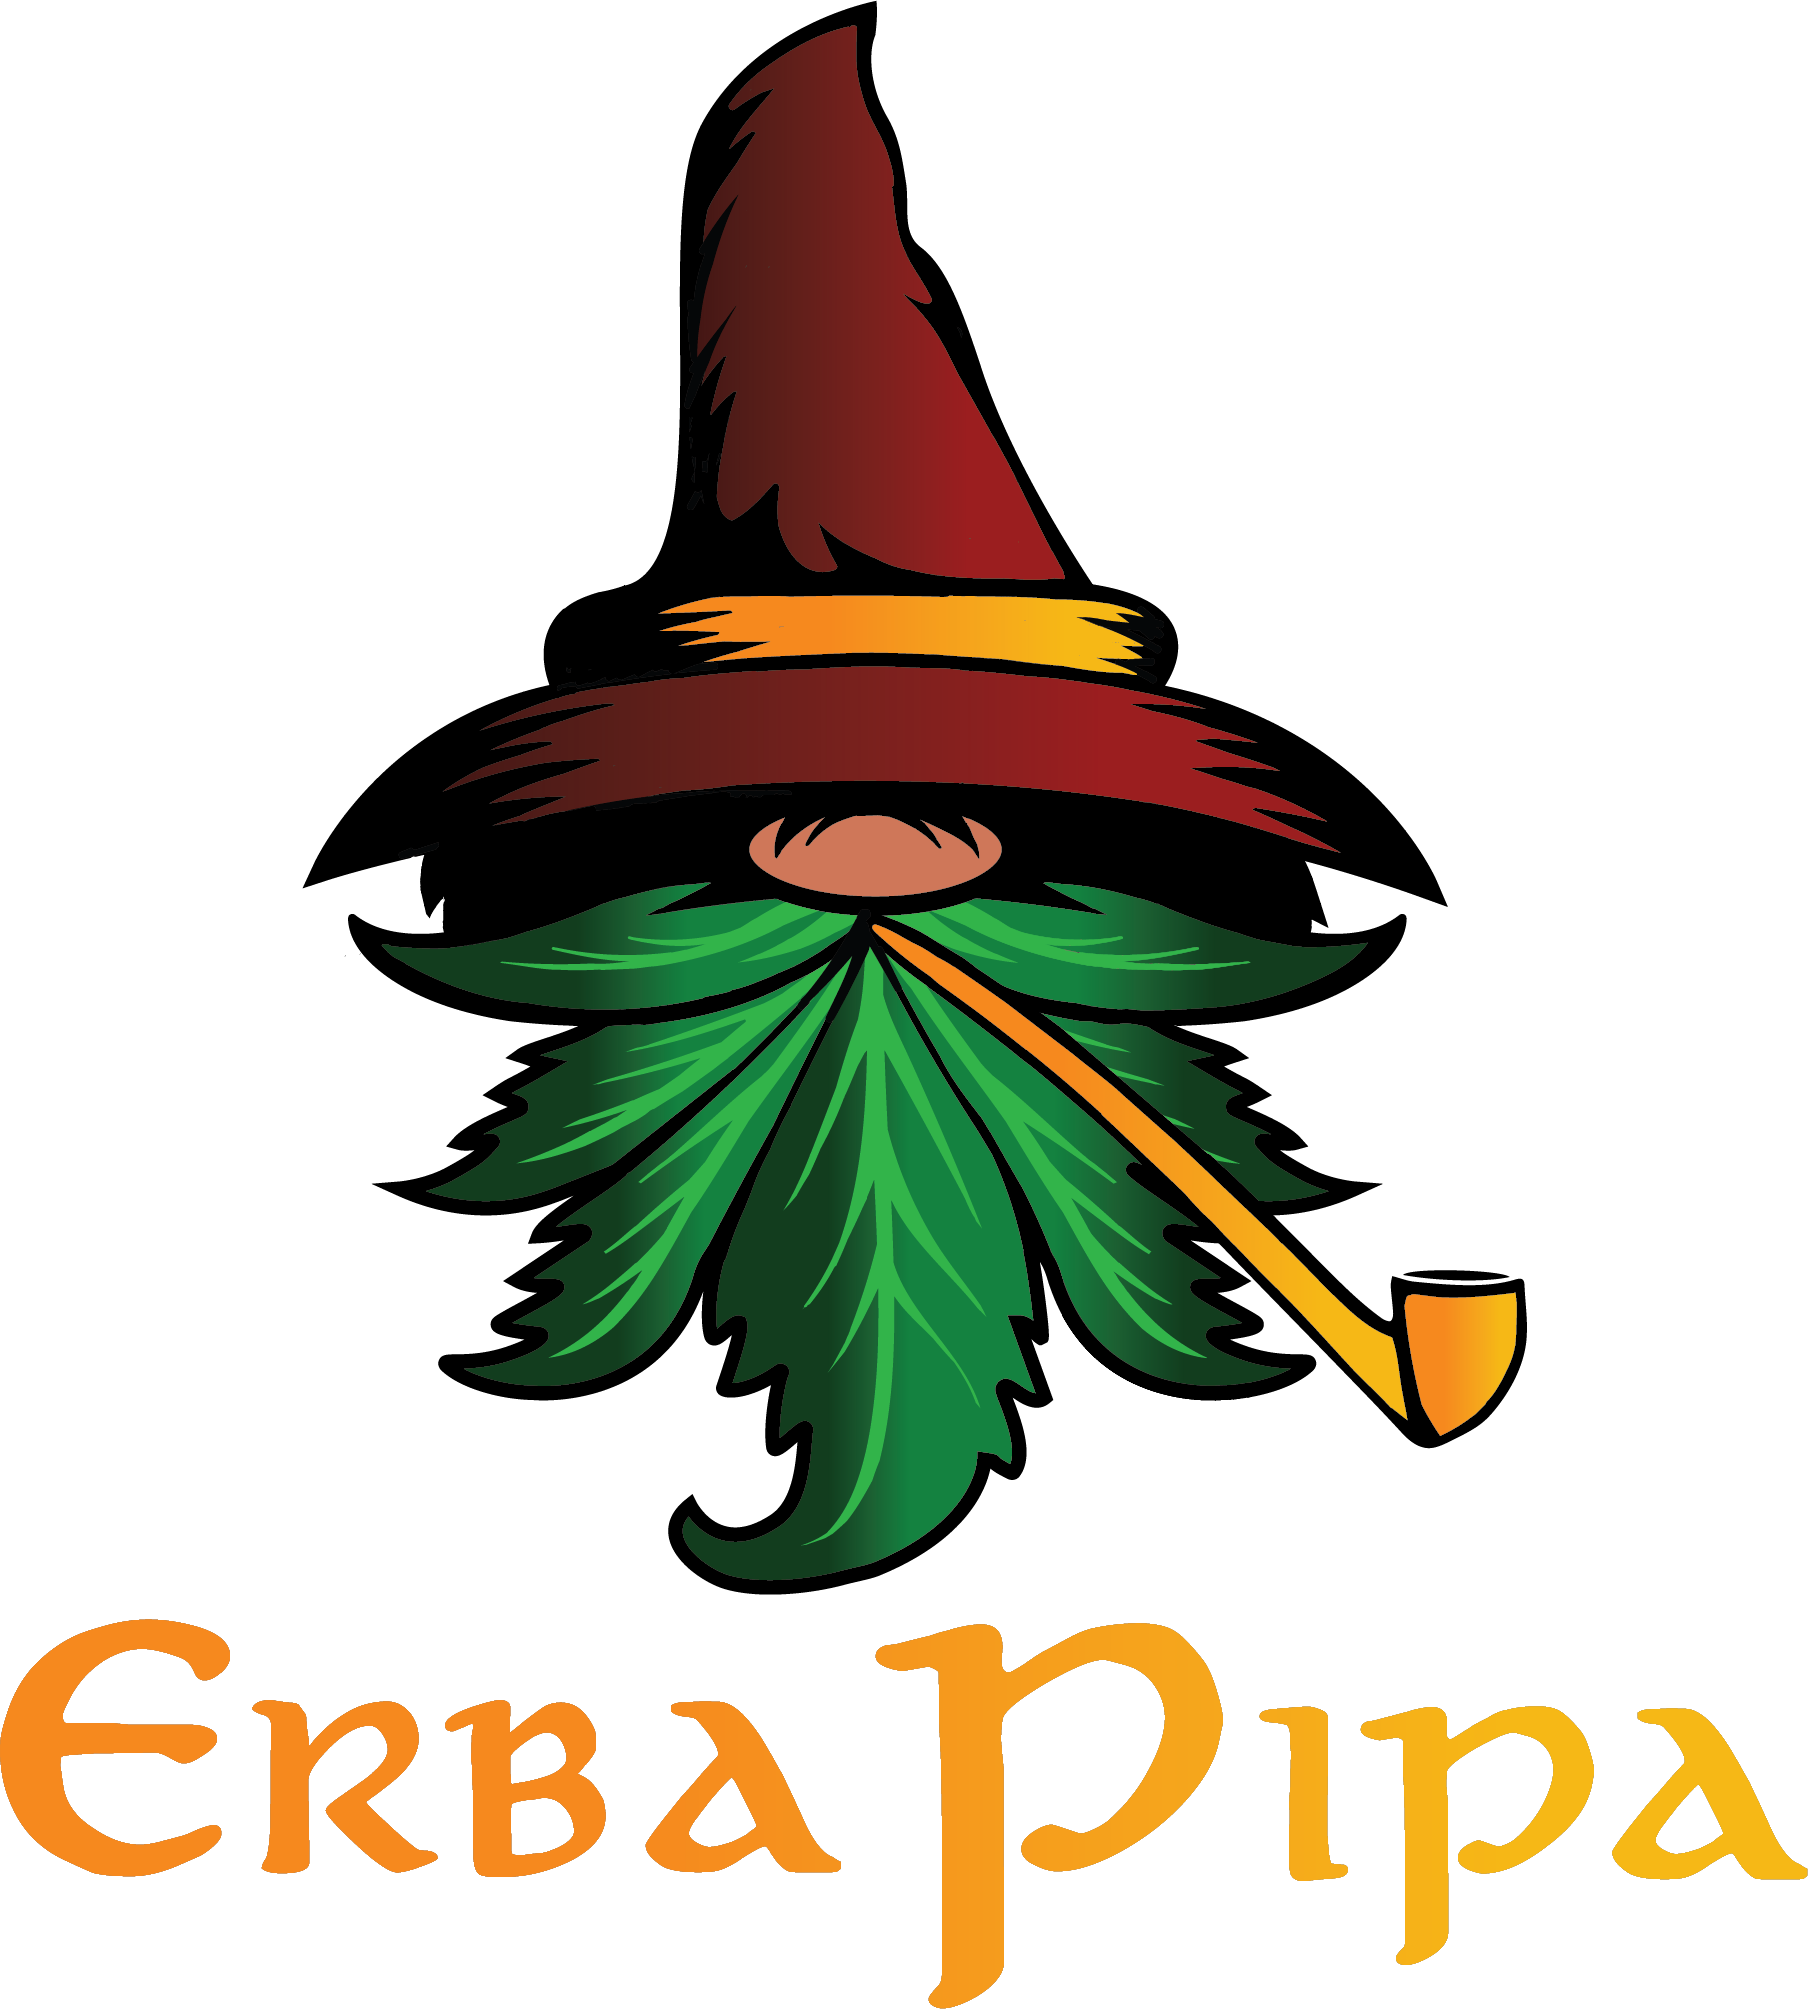 Erba Pipa